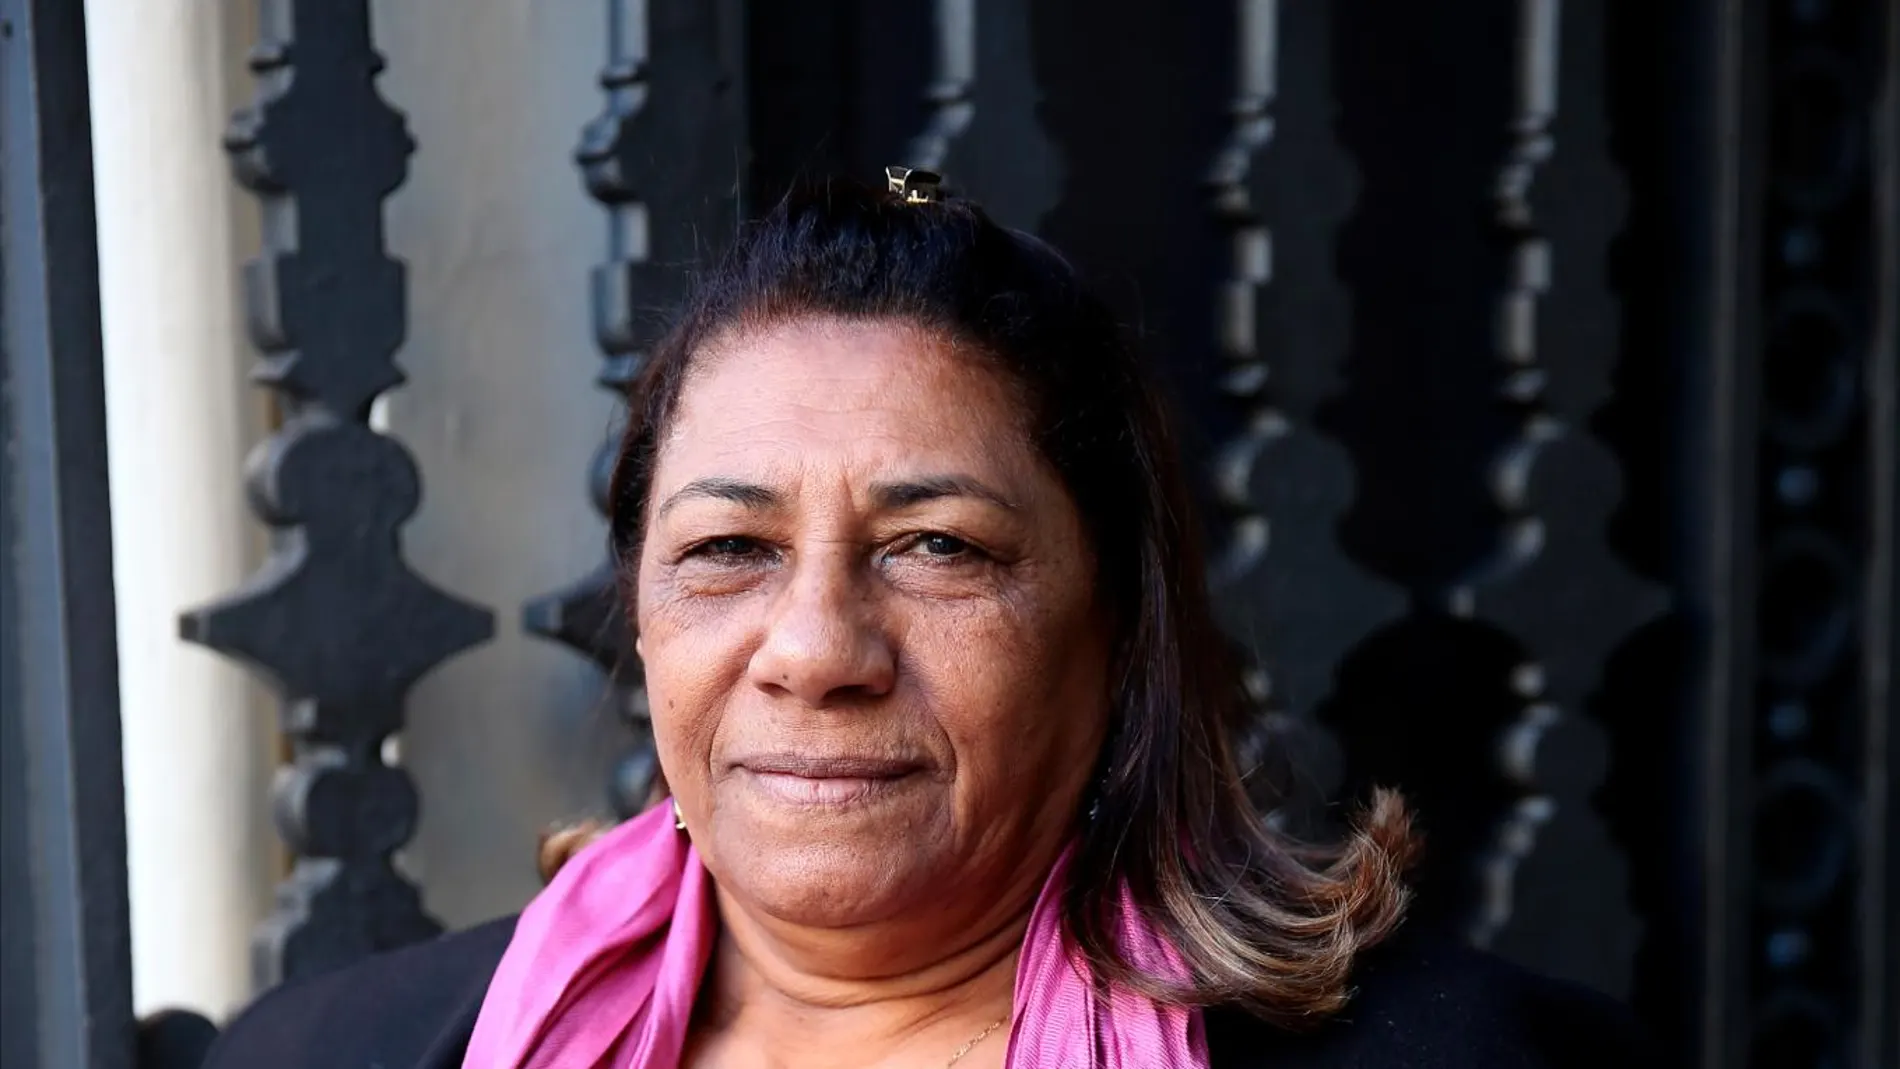 Marinete da Silva /Abogada, activista y madre de Marielle Franco / Foto: Cristina Bejarano